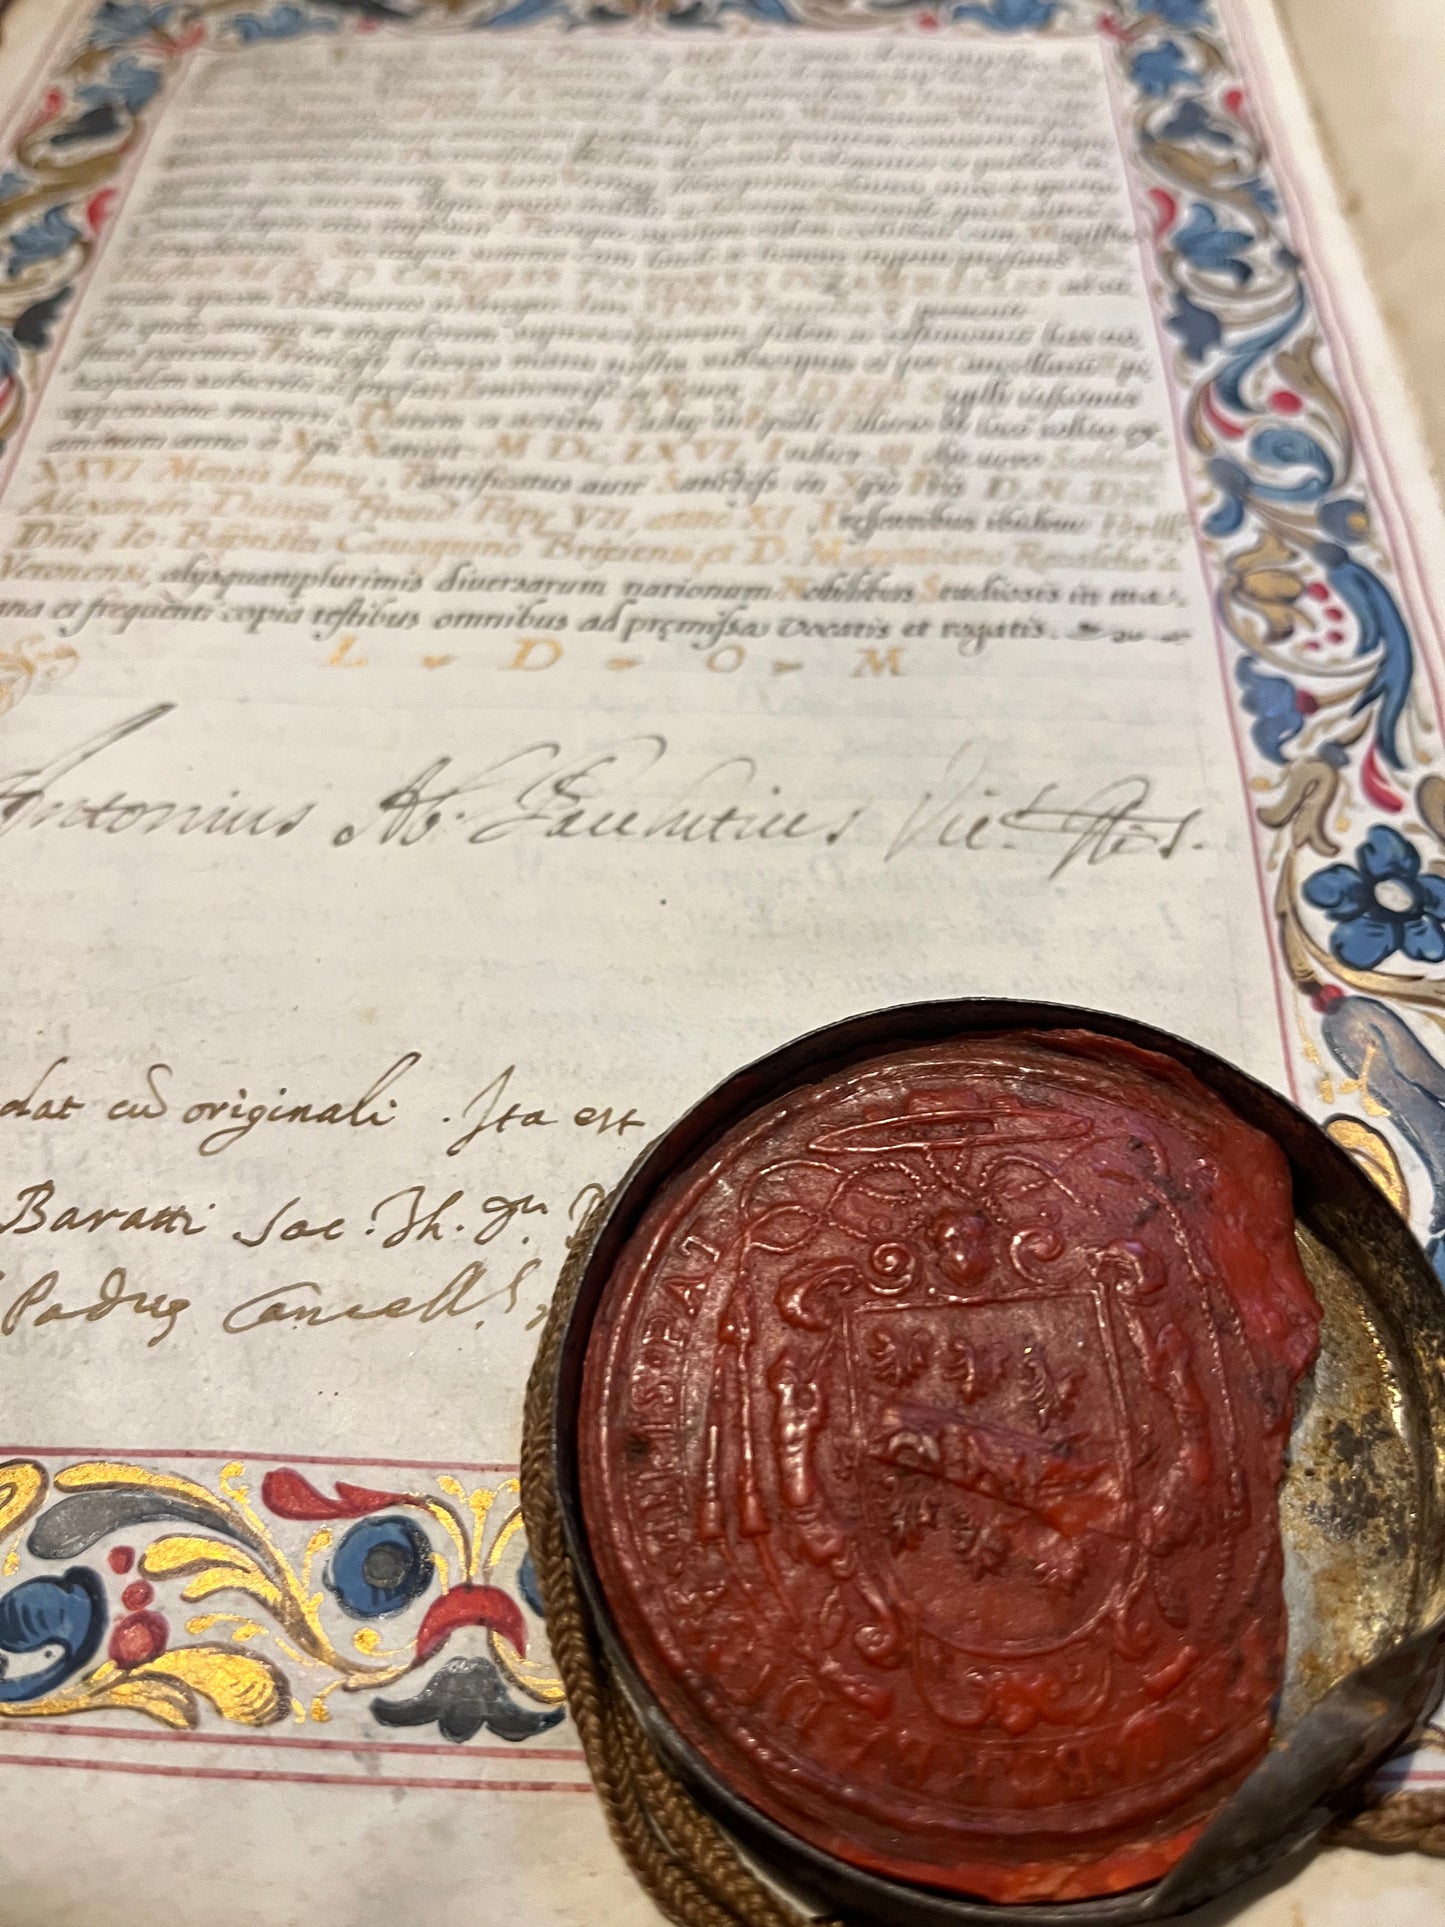 Beautiful 17th Century Manuscript Paduan degree with portrait and Saint's Seal